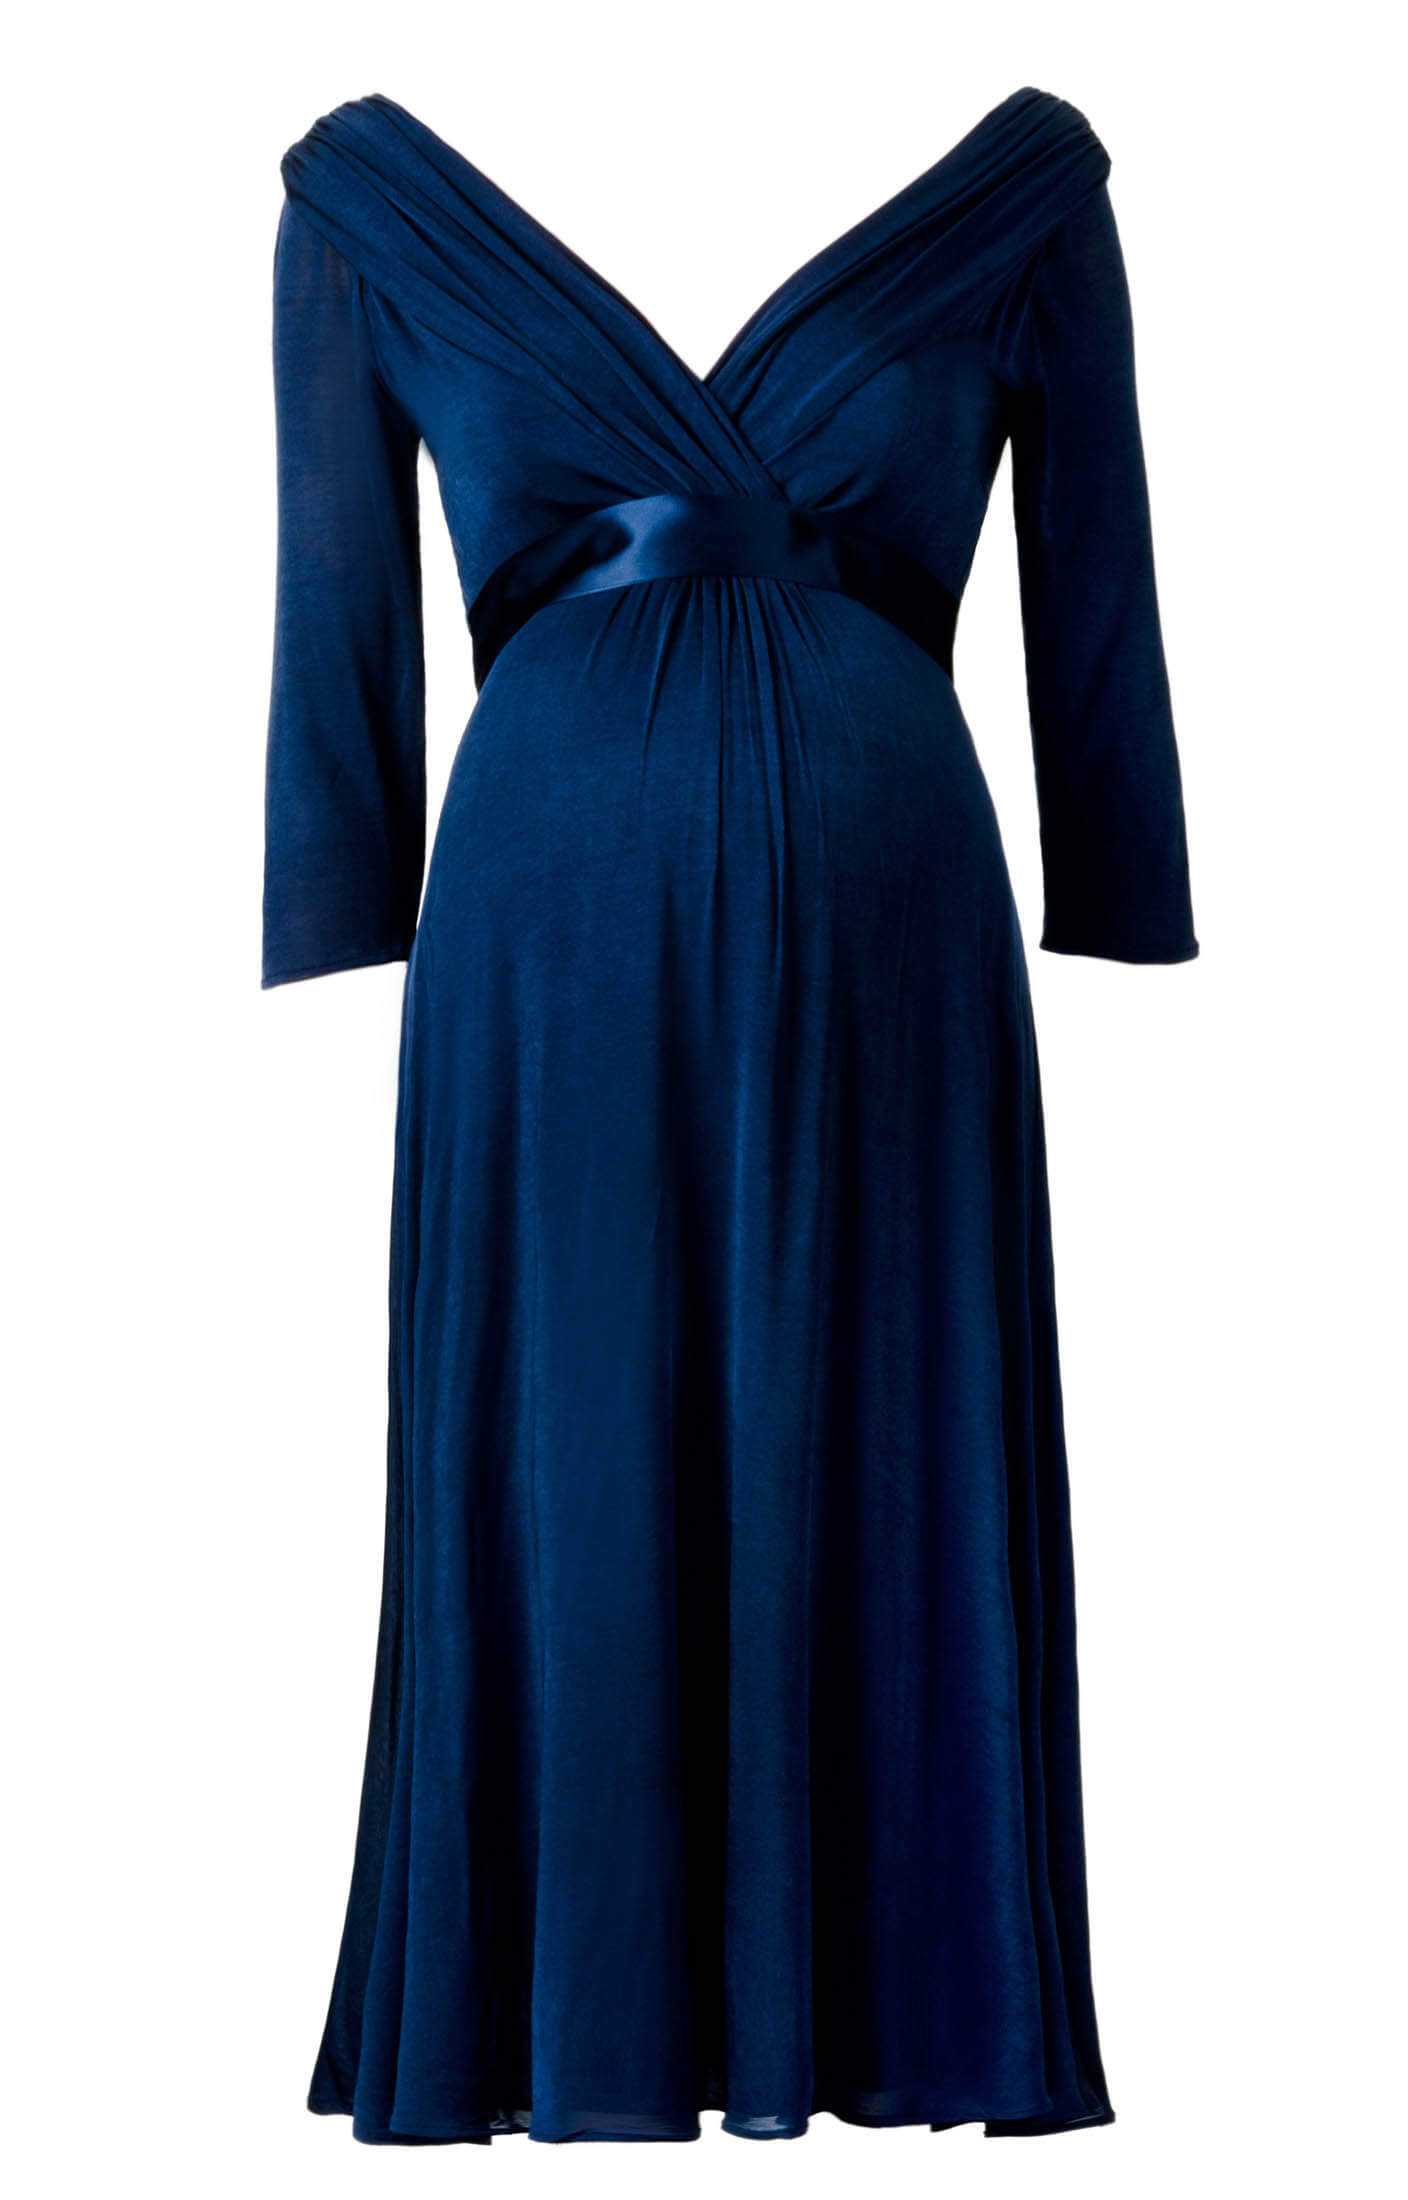 Buy > midnight blue draped dress > in stock